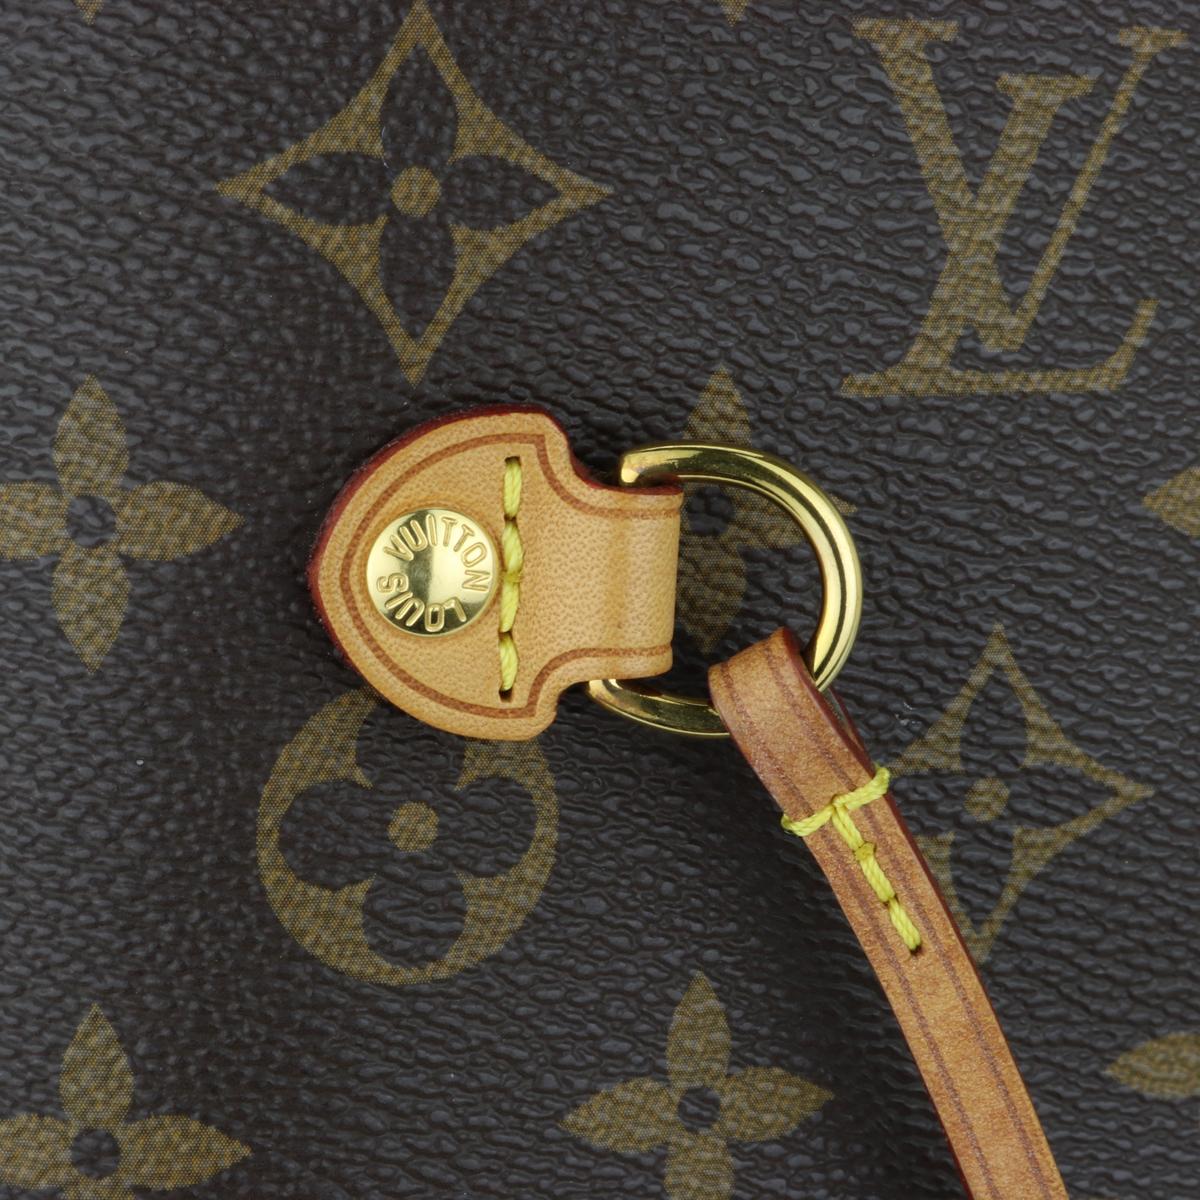 Louis Vuitton Neverfull MM Bag in Monogram with Pivoine Interior 2019 1